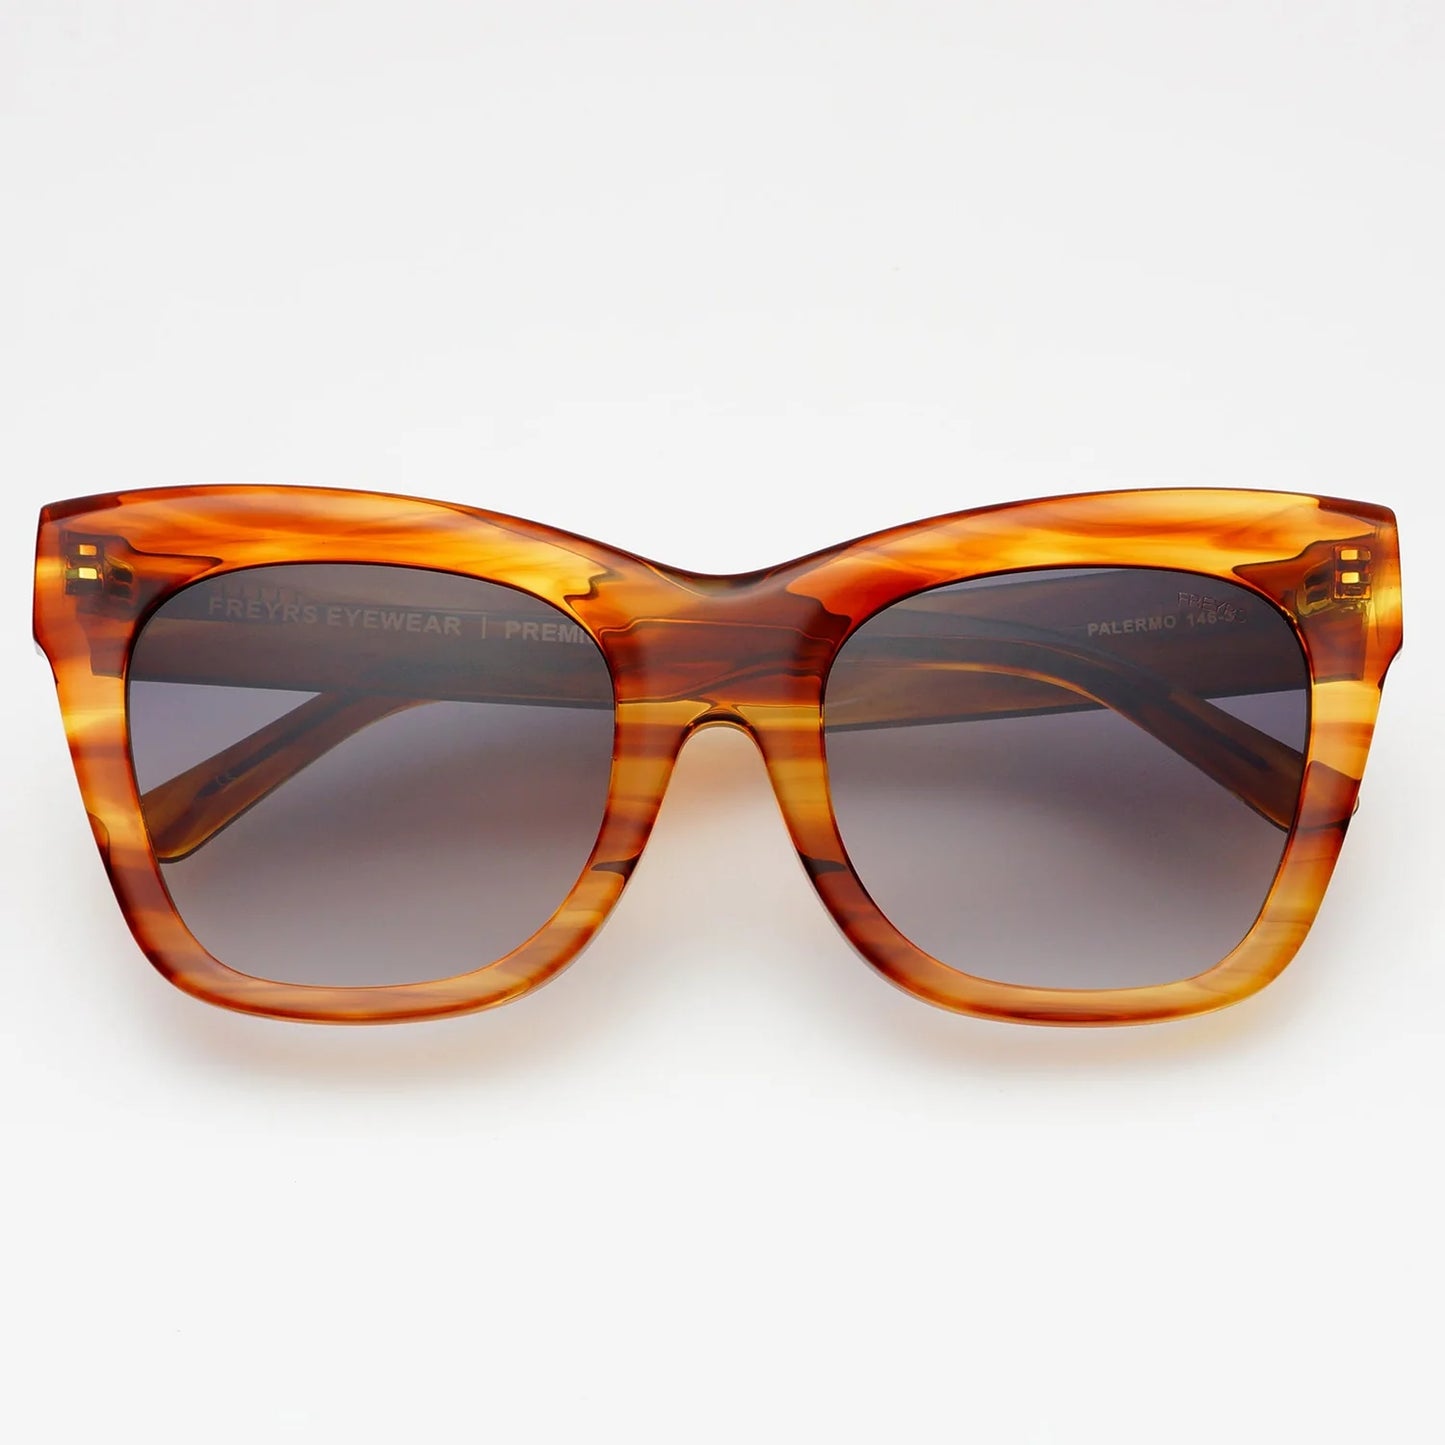 Freyrs Palermo Acetate Oversized Cat Eye Sunglasses - Brown